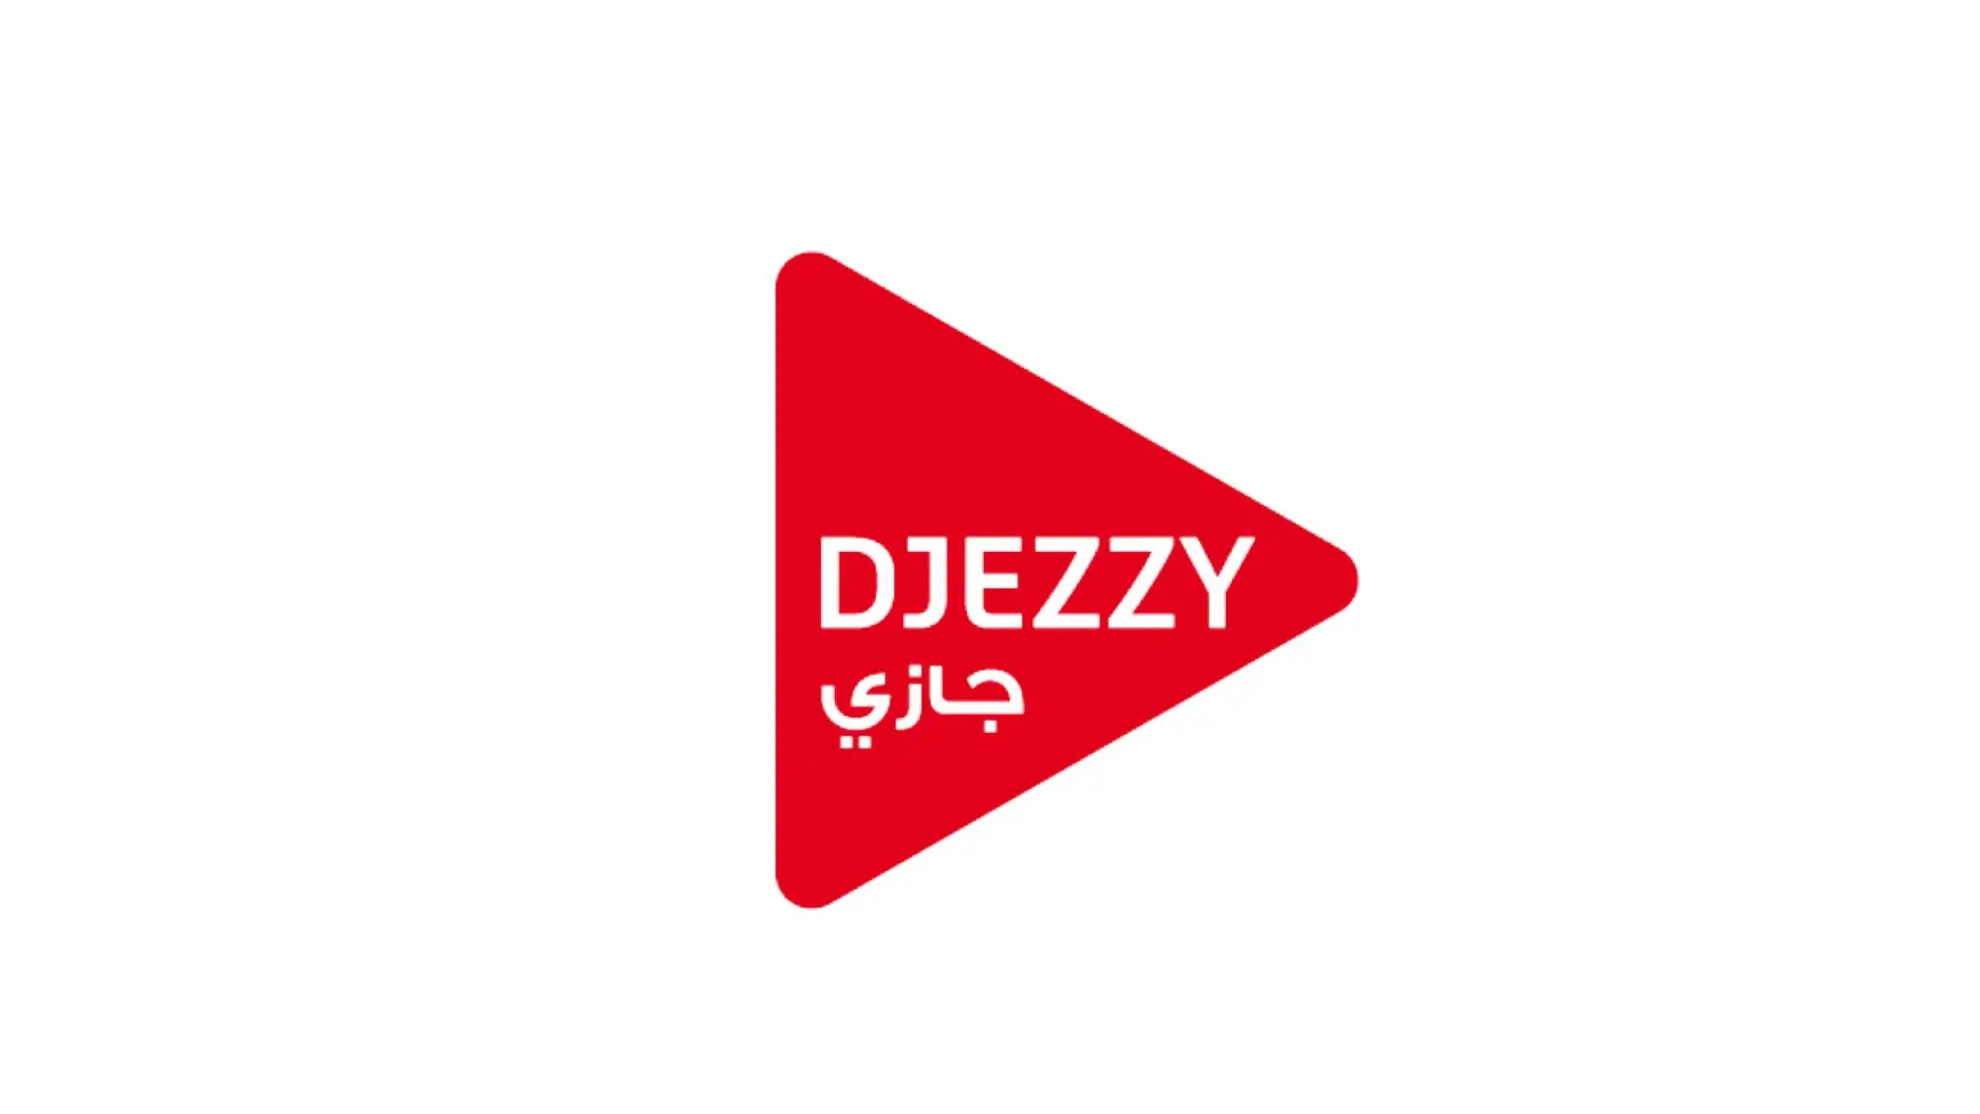 (1.36$) Djezzy 100 DZD Mobile Top-up DZ